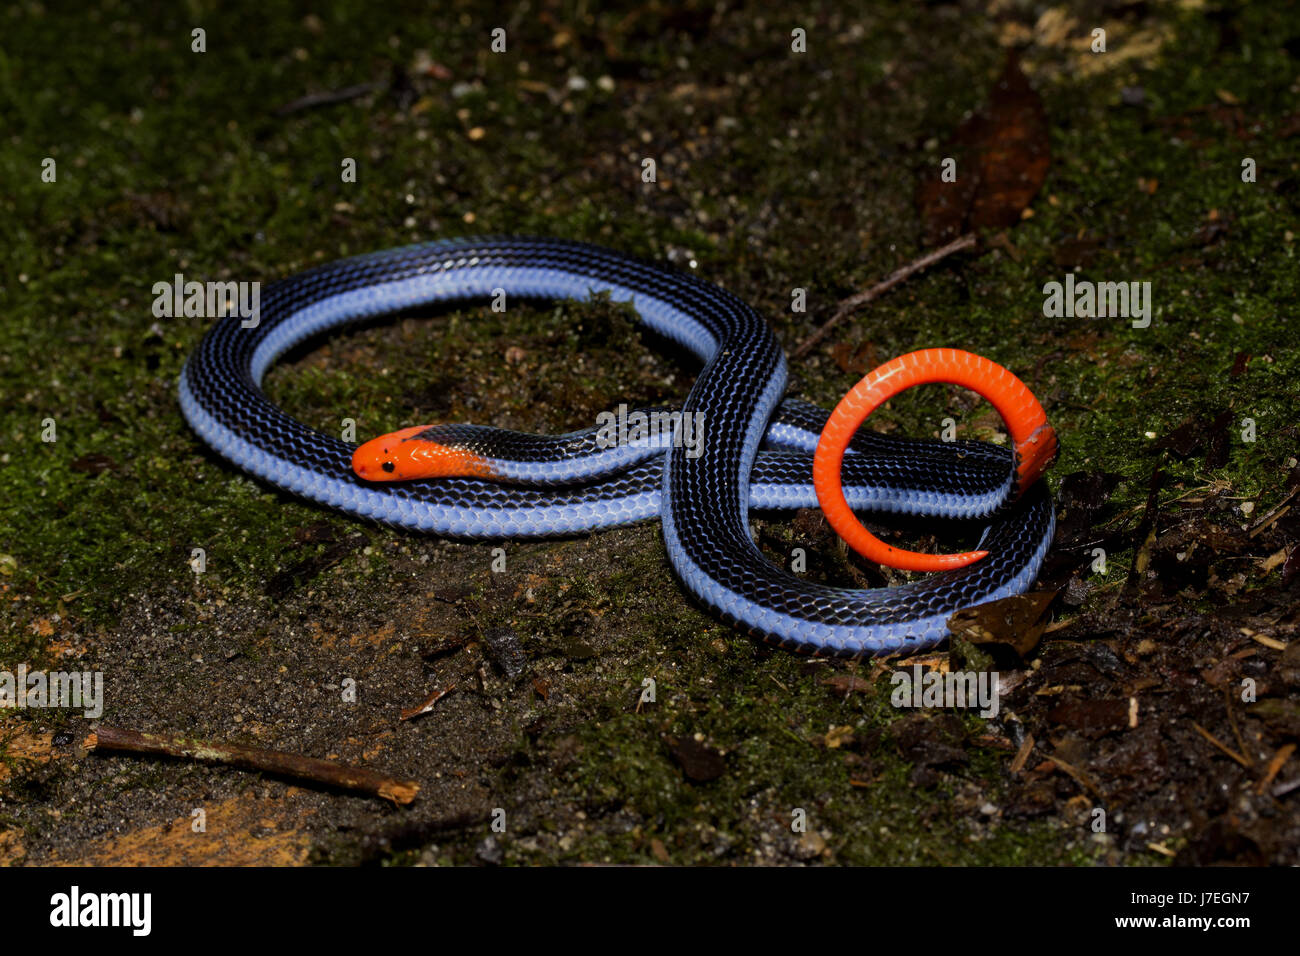 Corallo blu Snake Foto Stock